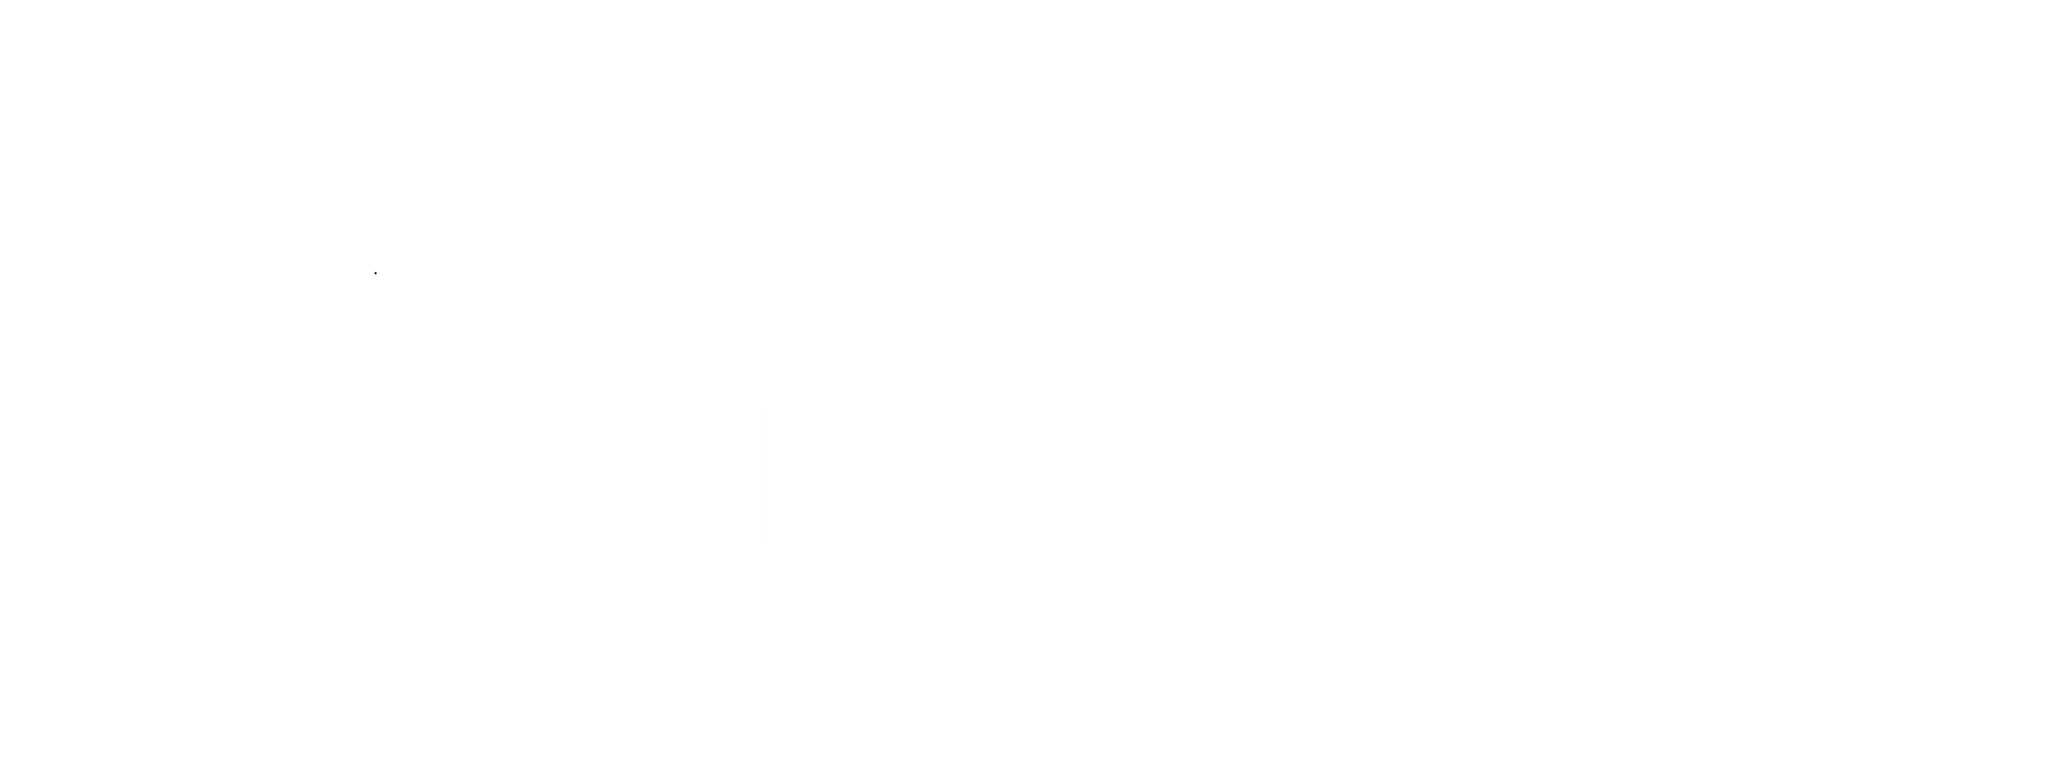 Lambertones Logo - Website White